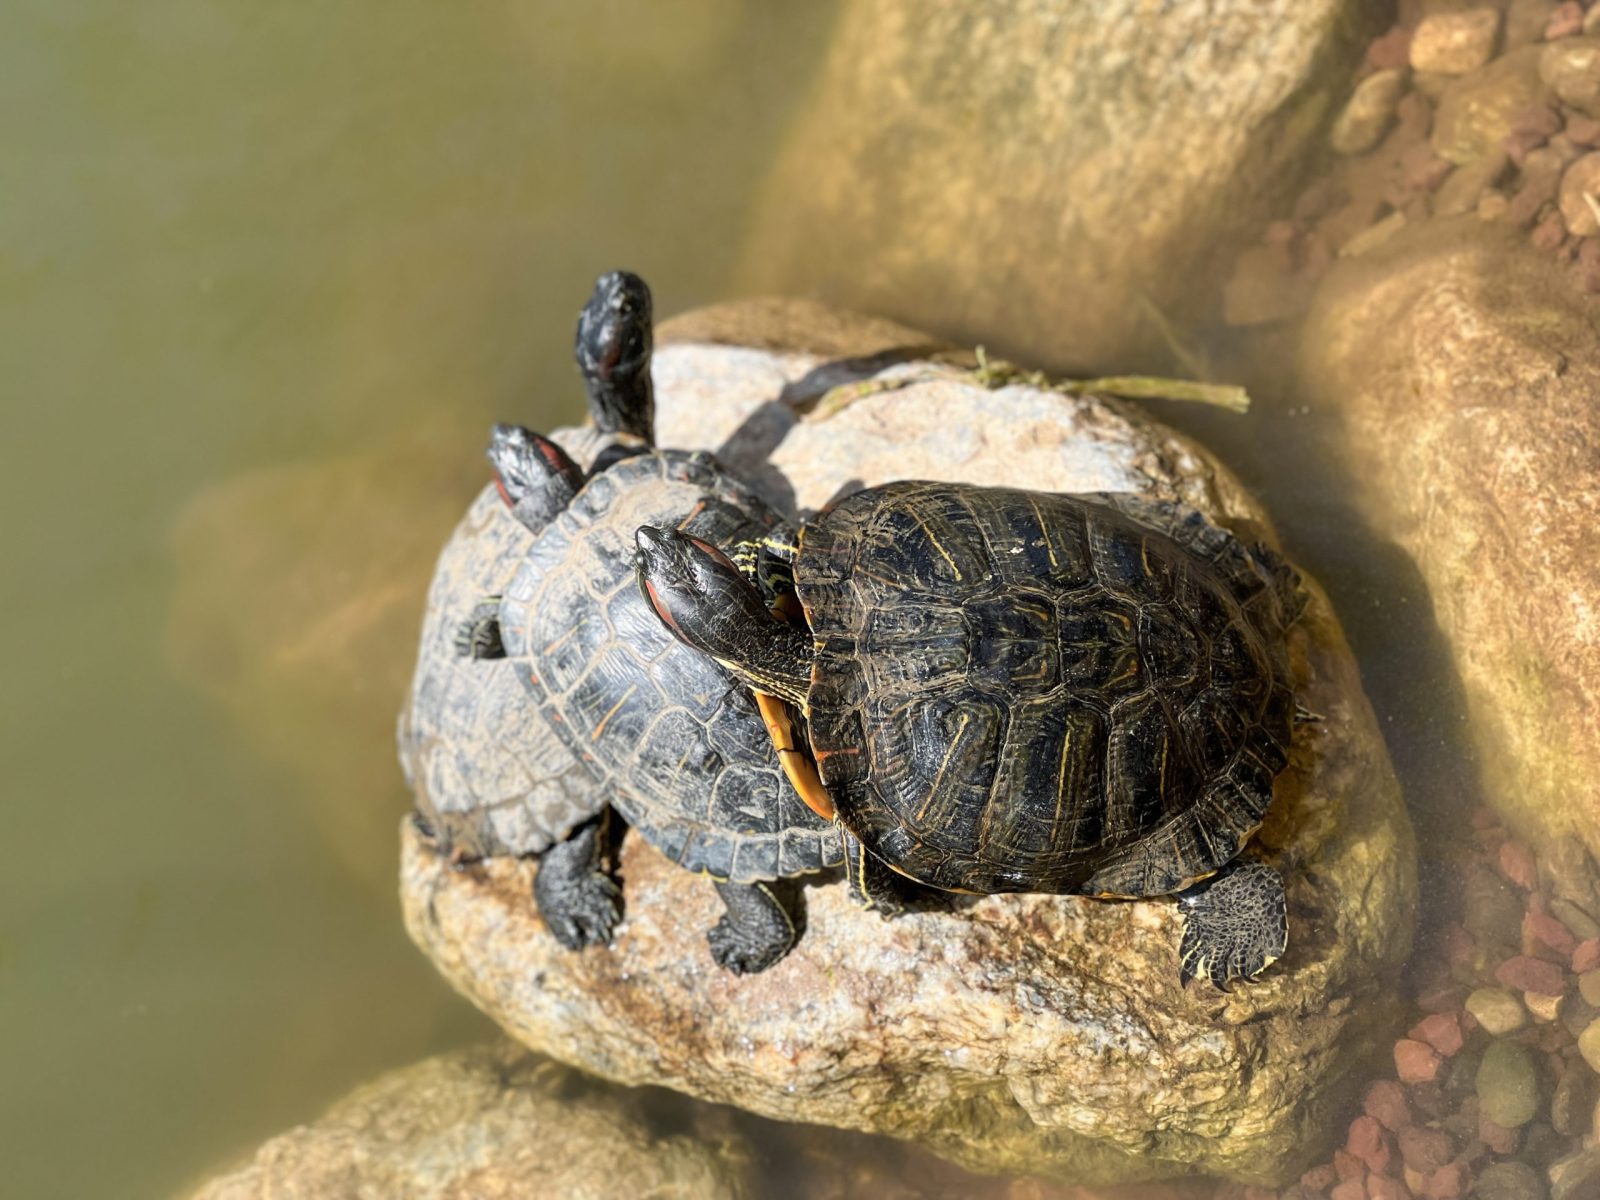 Three turtles sitting together on rock